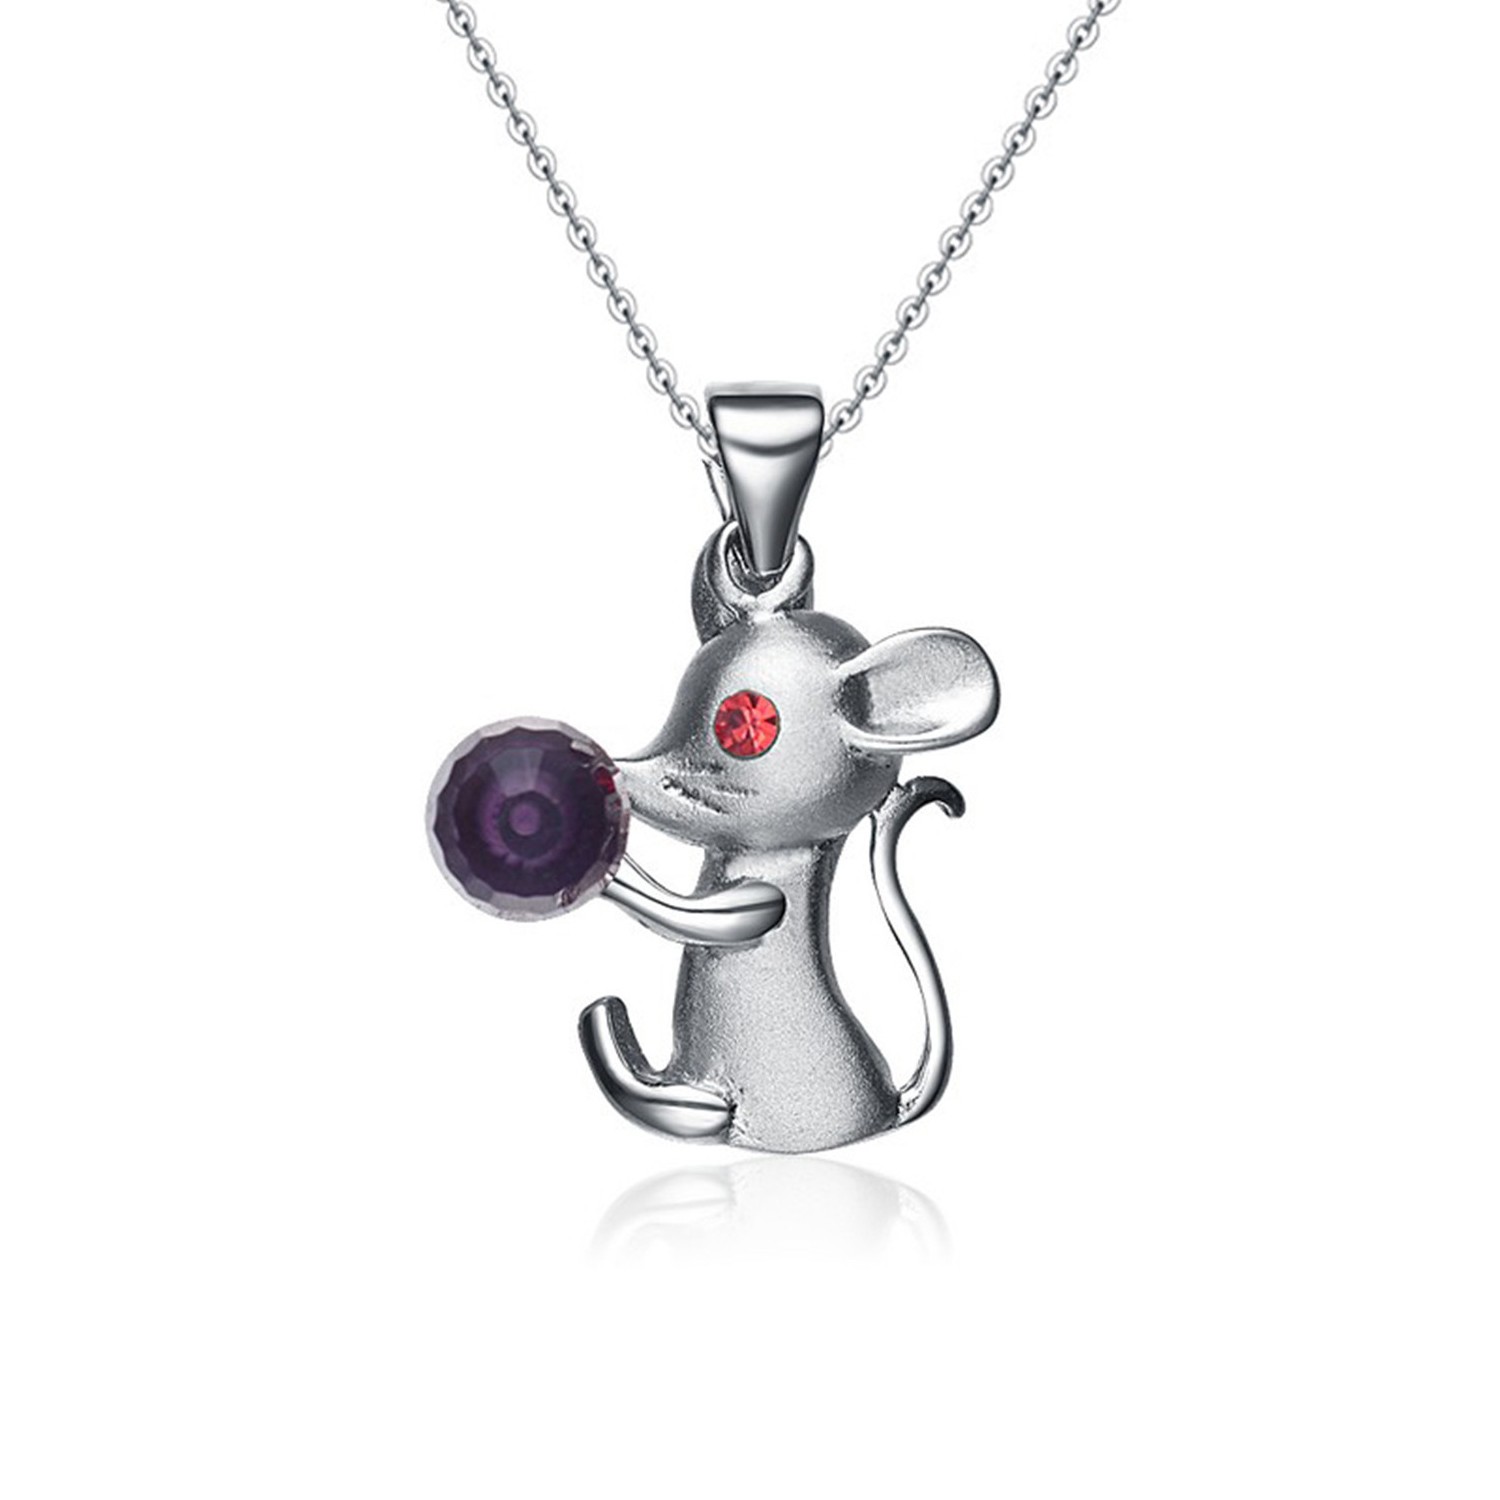 2021 Jewelry Fashion Necklace Set Women Design Charm Choker Cute Mouse Pendant Necklace jewelry